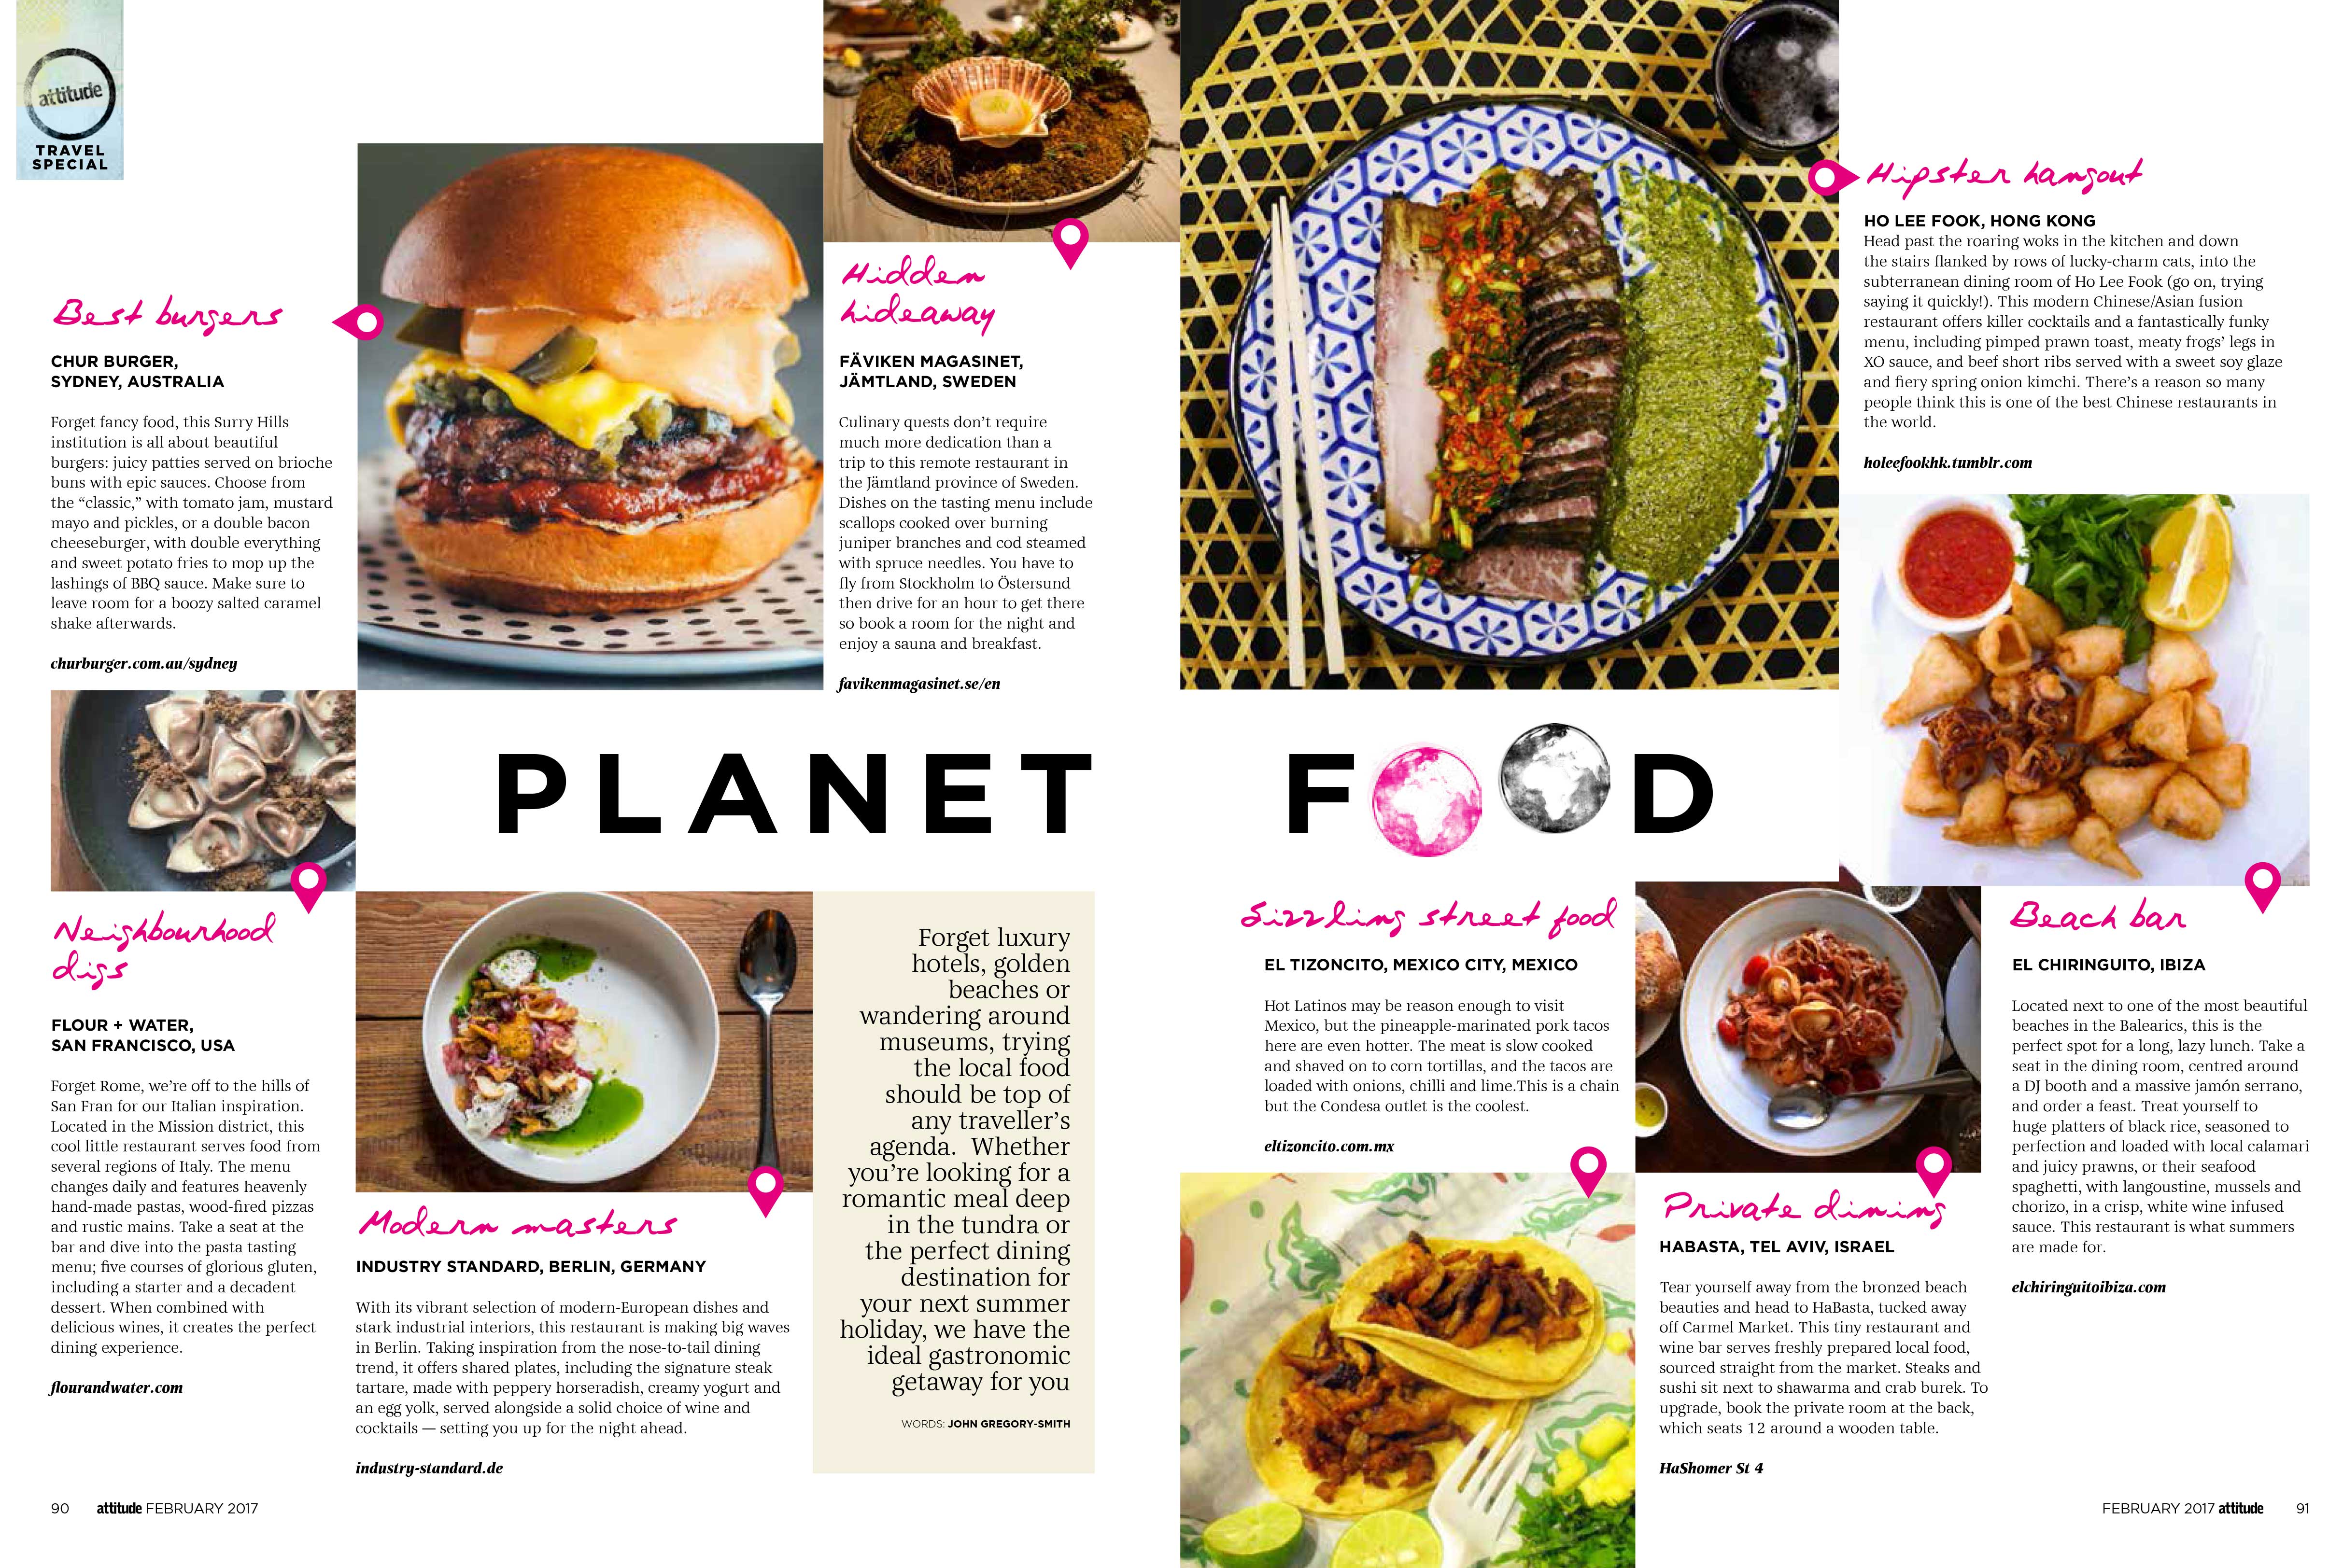 Planet-food-attitude-magazine-john-gregory-smith